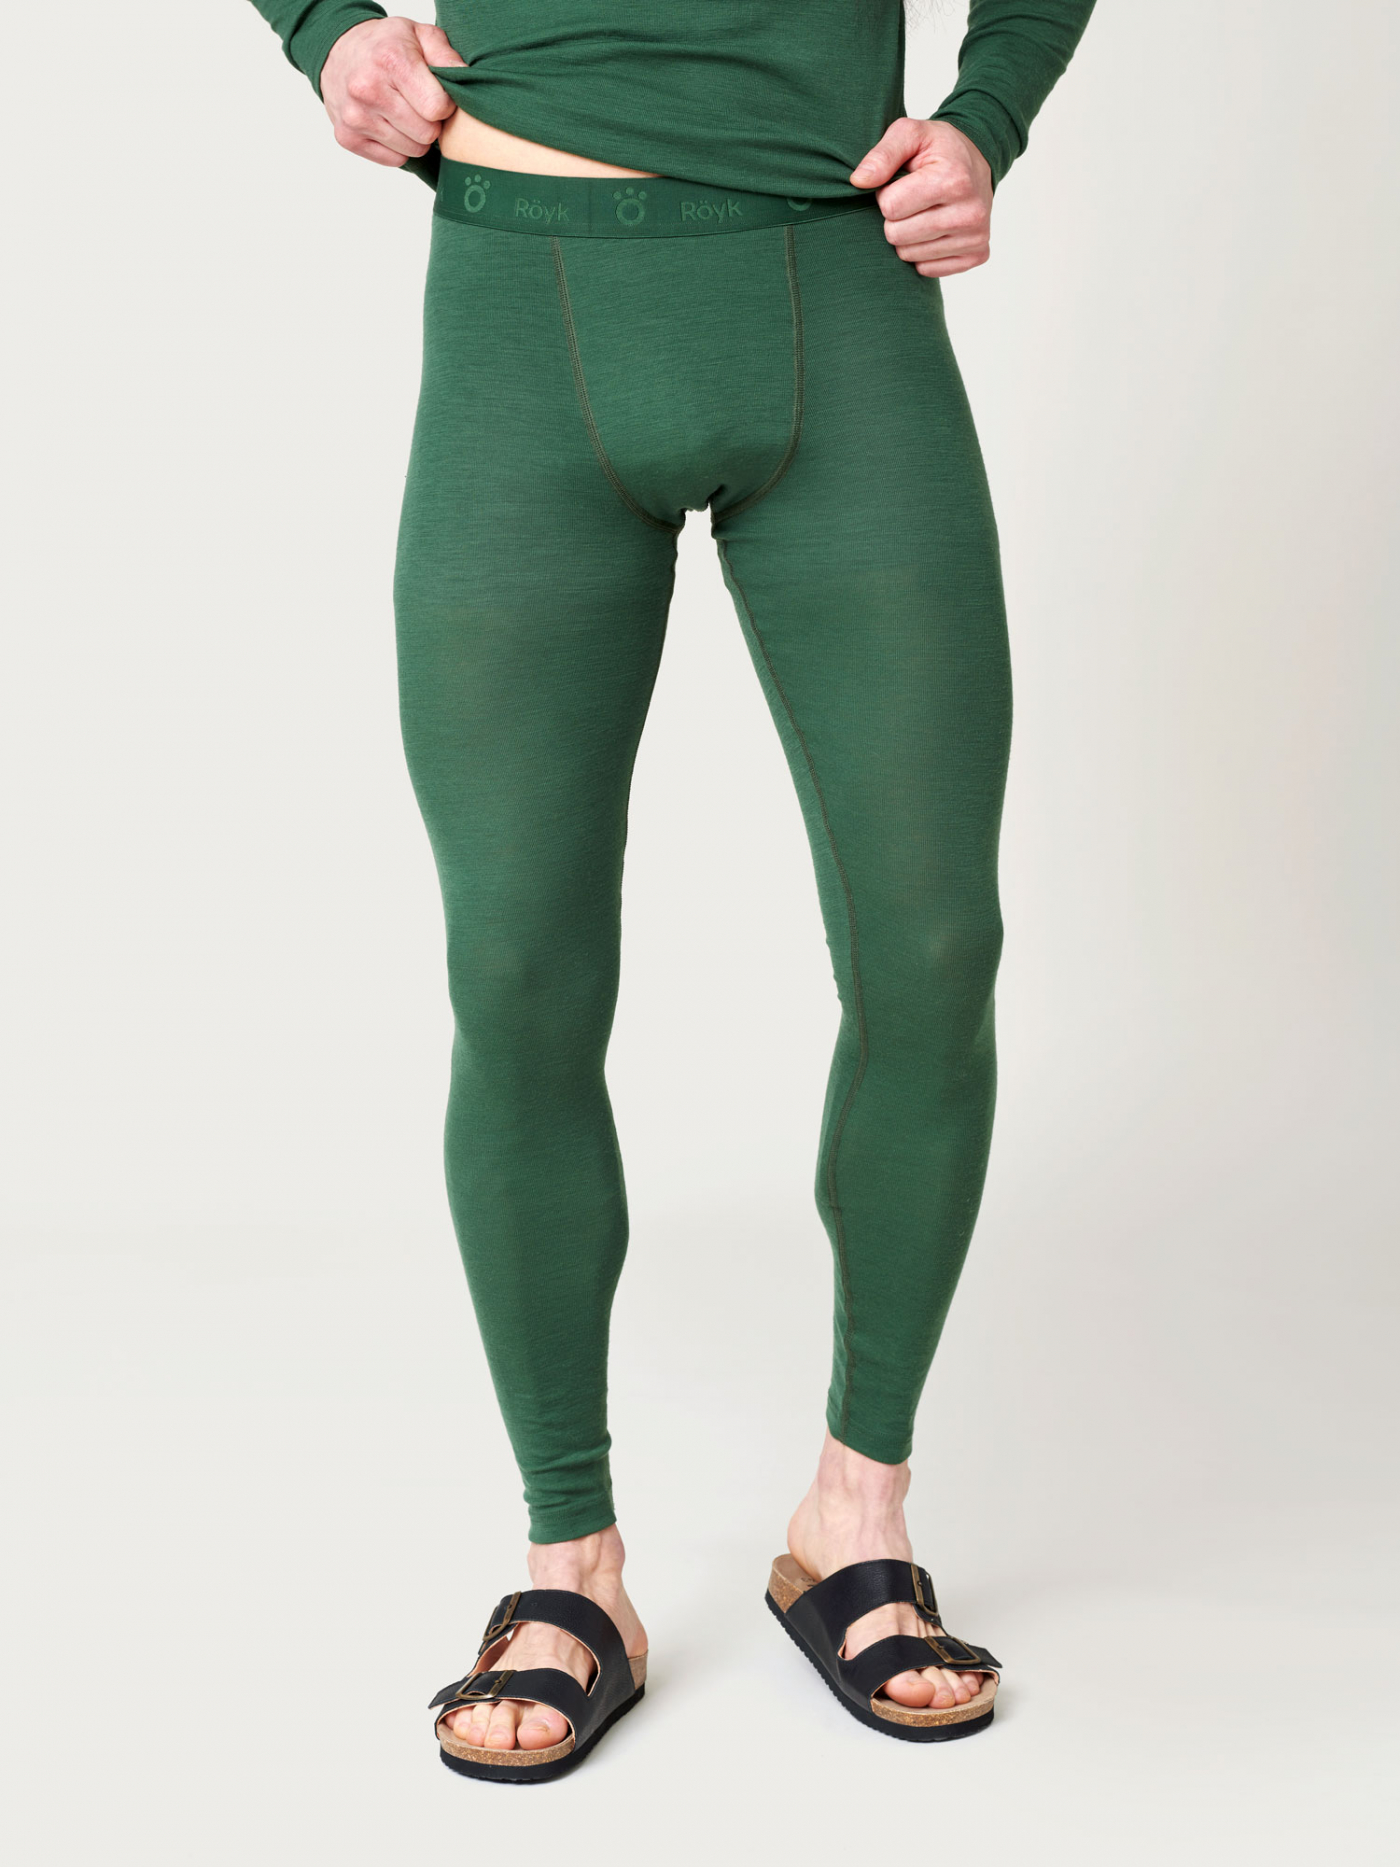 RYDCOT Mens Pants Clearance Men's Print Cotton Breathable Sports Leggings  thermal Long Johns Underwear Pants Green XL 